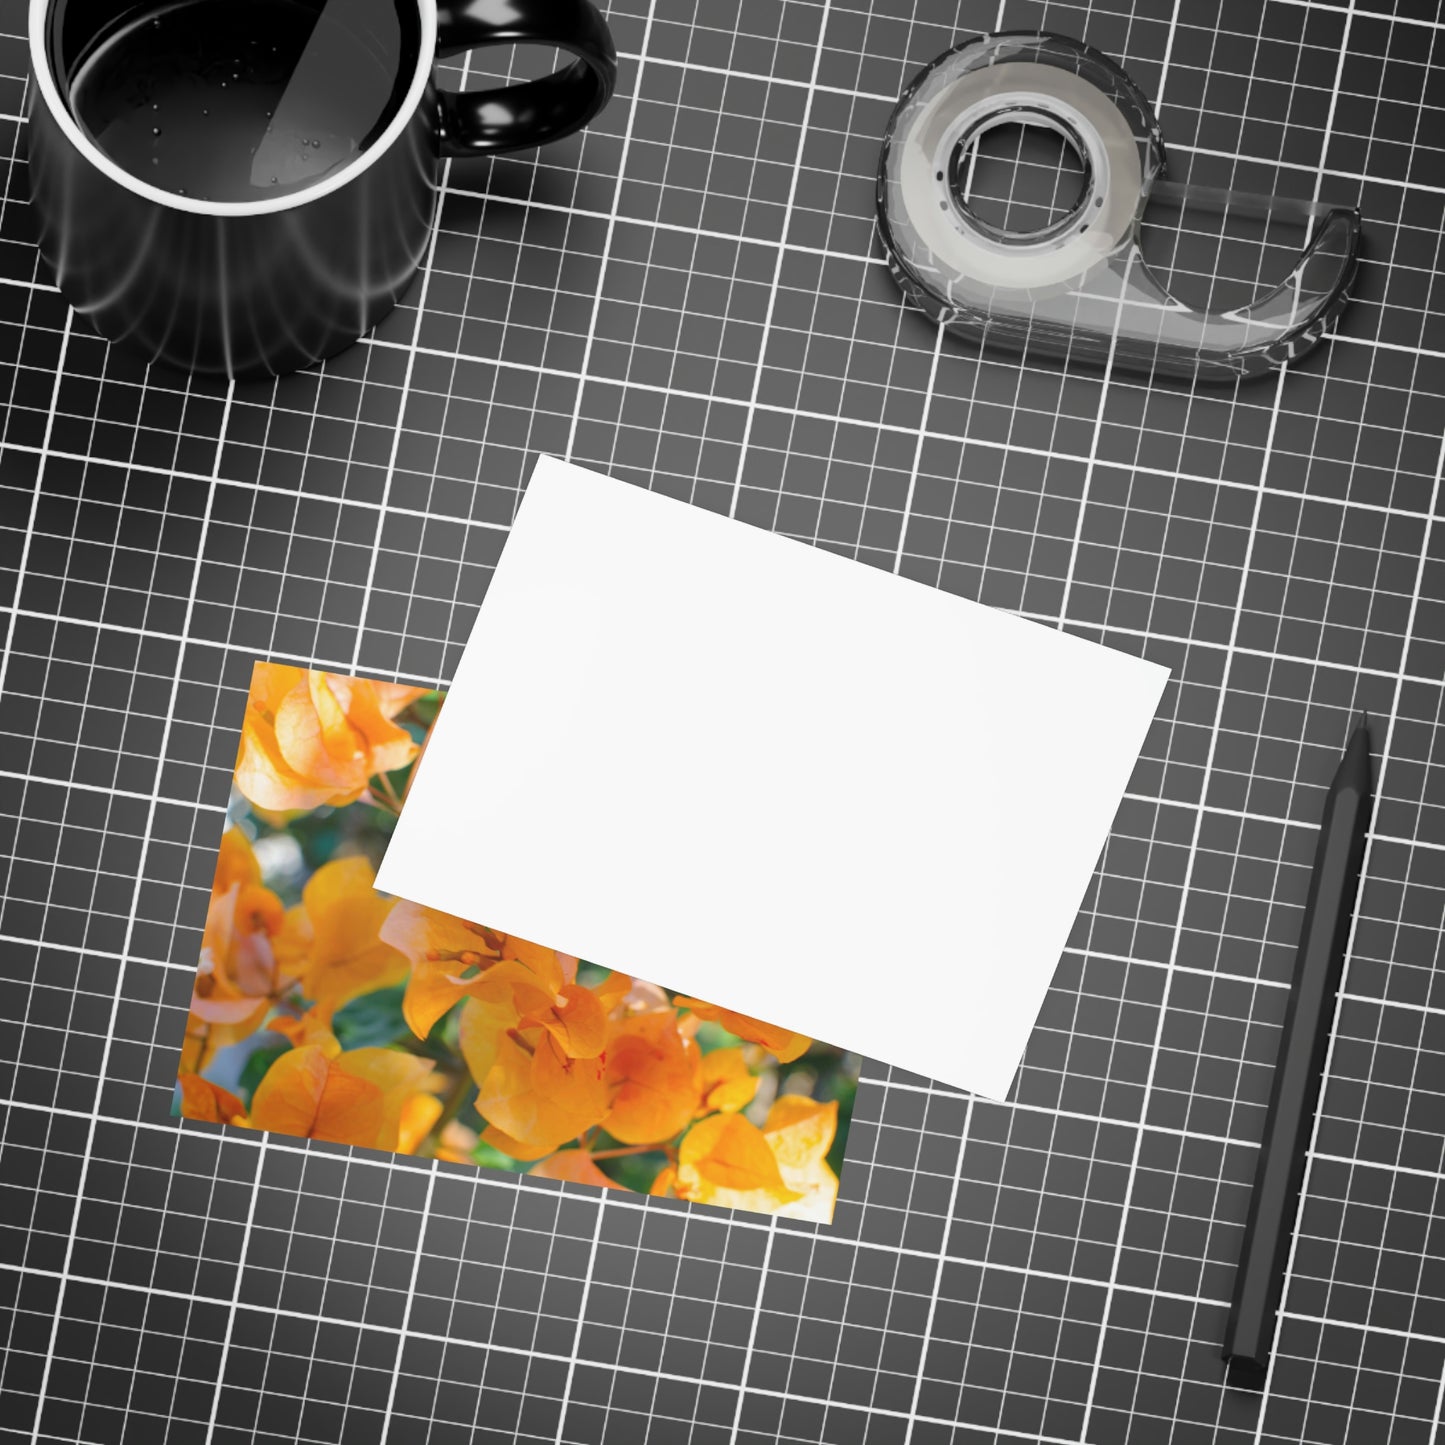 Flowers 29 Greeting Card Bundles (envelopes not included)